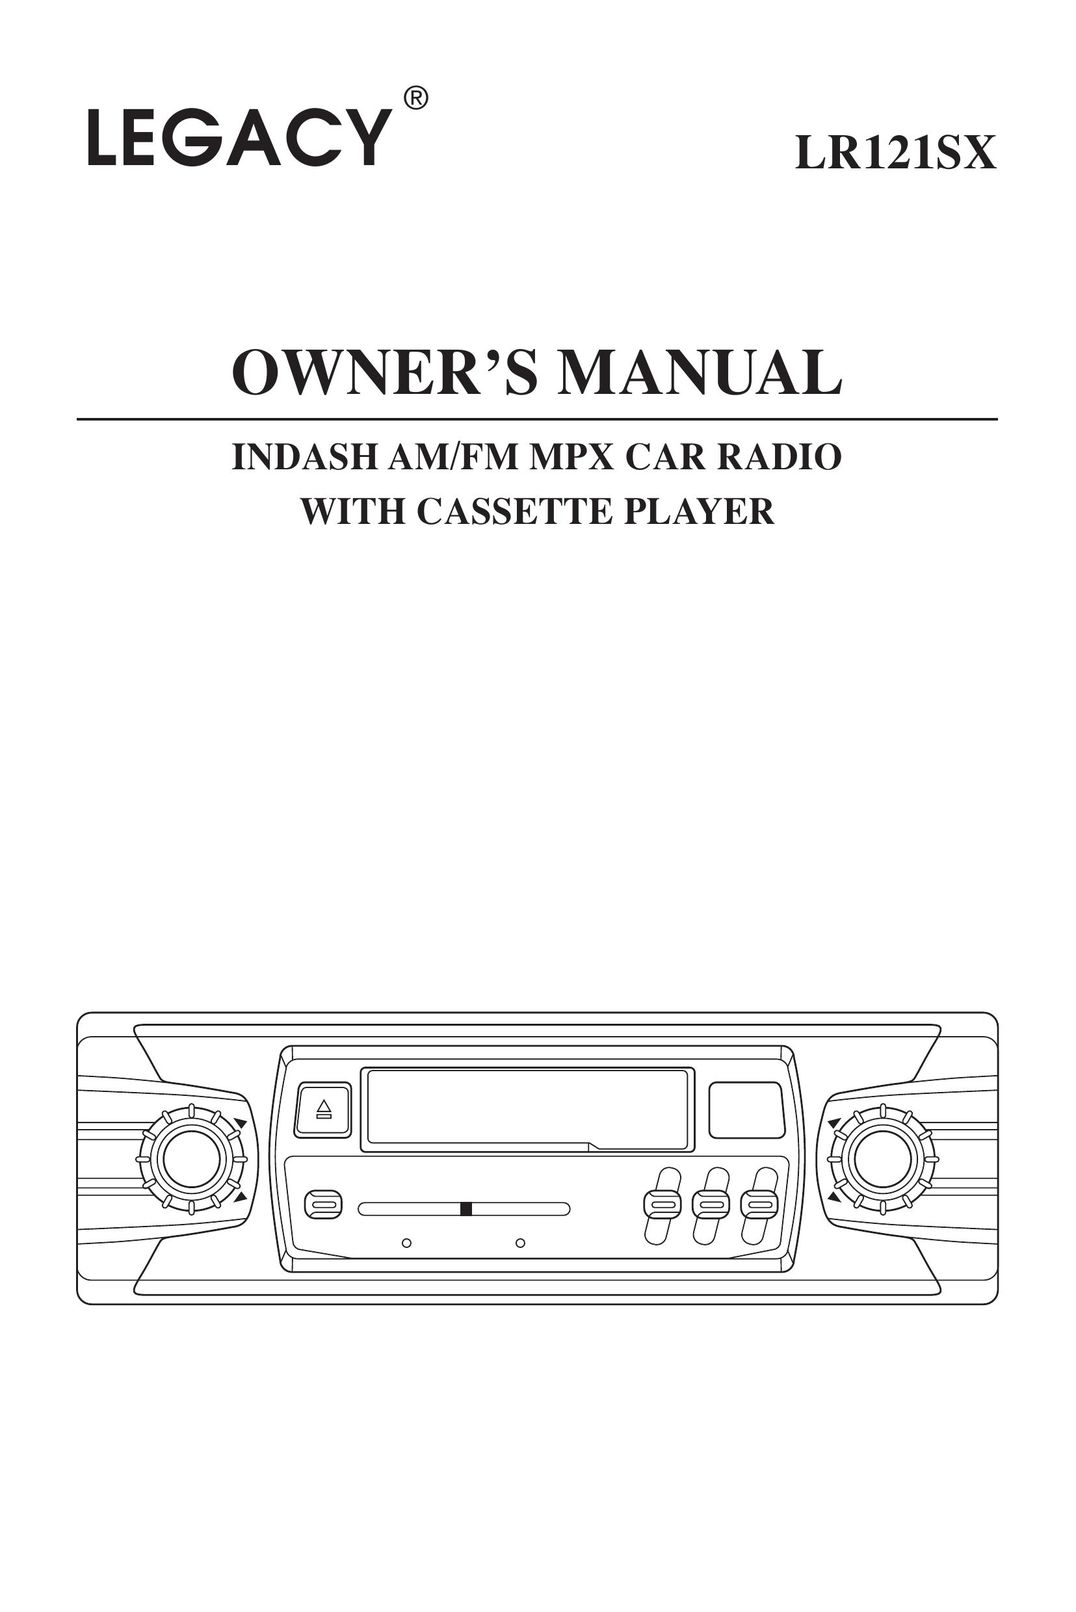 Legacy Car Audio LR121SX Car Stereo System User Manual